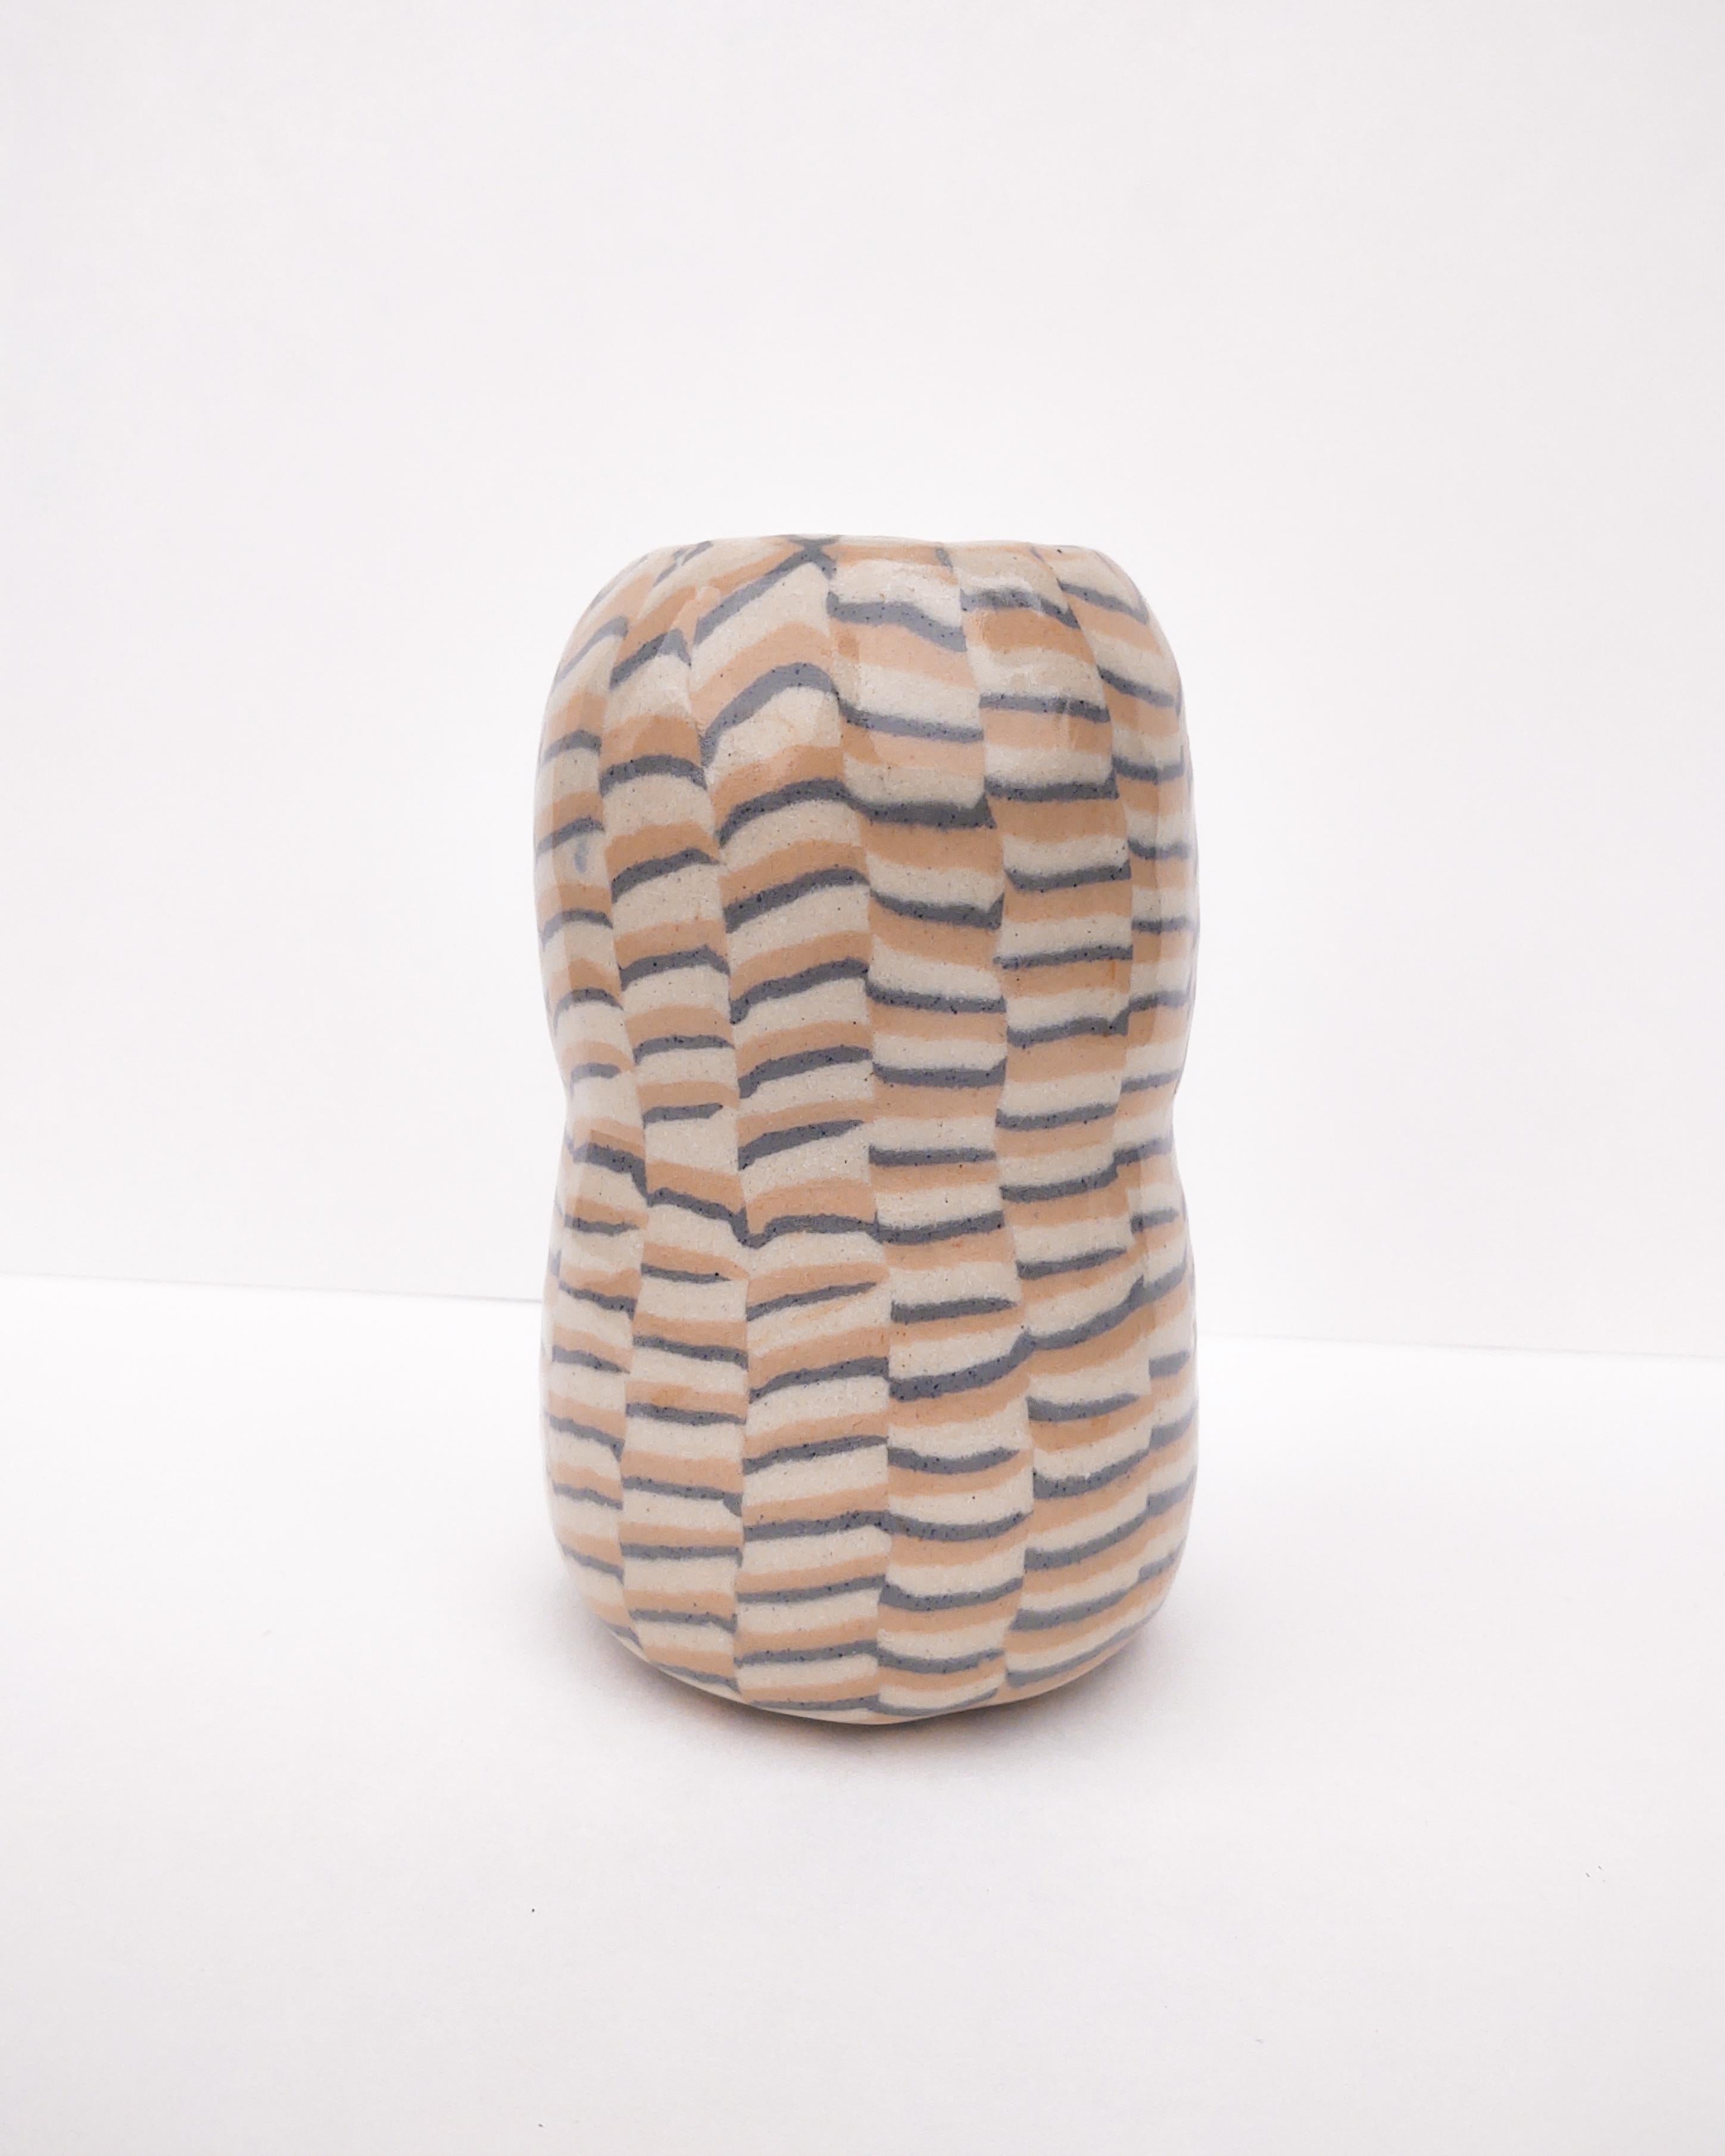 Organic Modern Handmade Nerikomi Three Color Abstract 'Peanut' Vase by Fizzy Ceramics For Sale